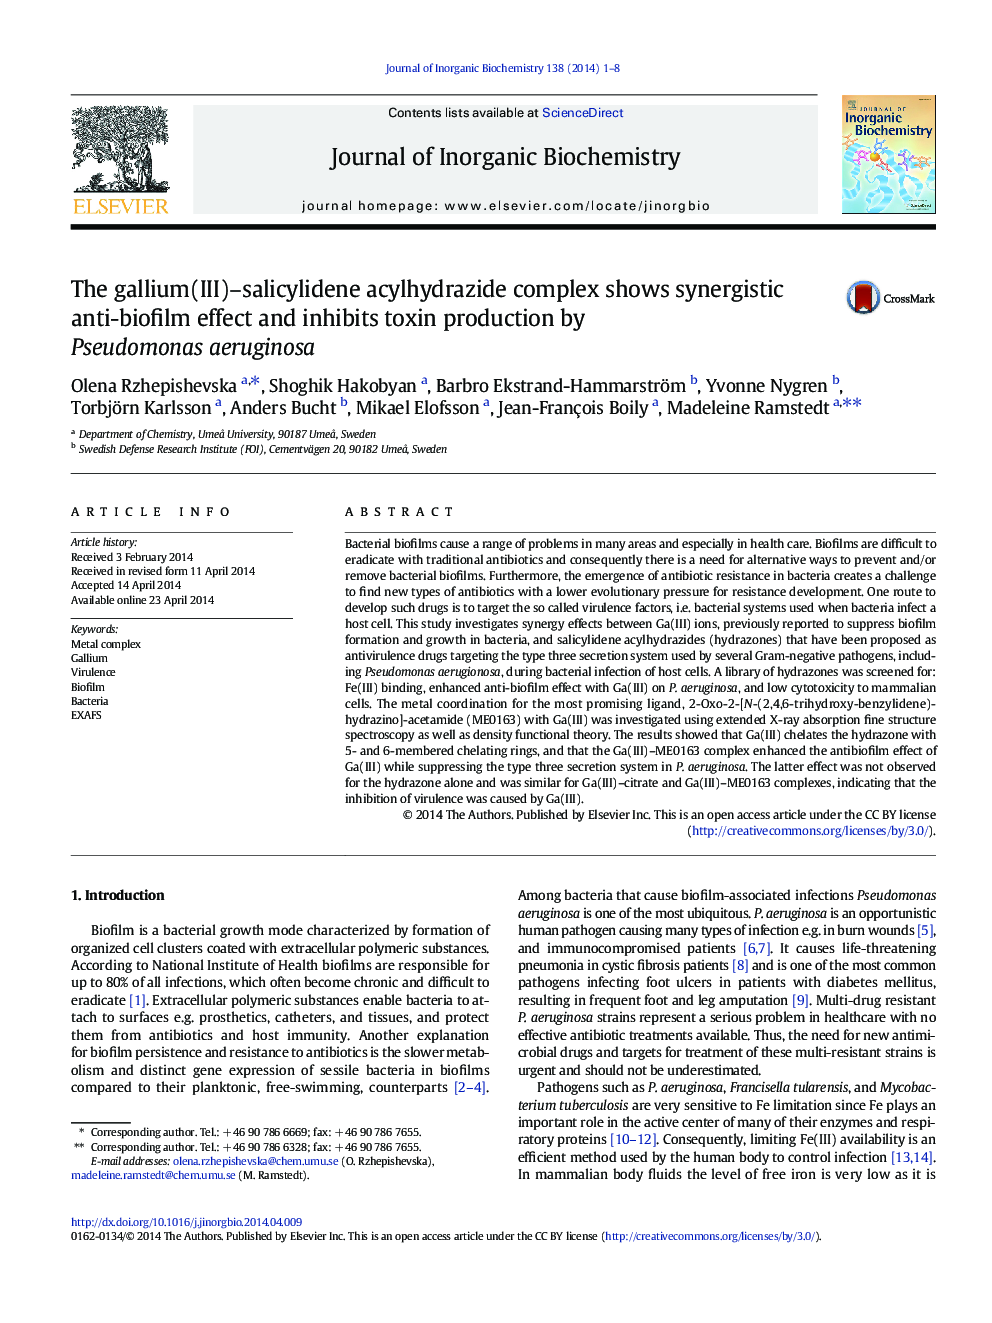 The gallium(III)-salicylidene acylhydrazide complex shows synergistic anti-biofilm effect and inhibits toxin production by Pseudomonas aeruginosa